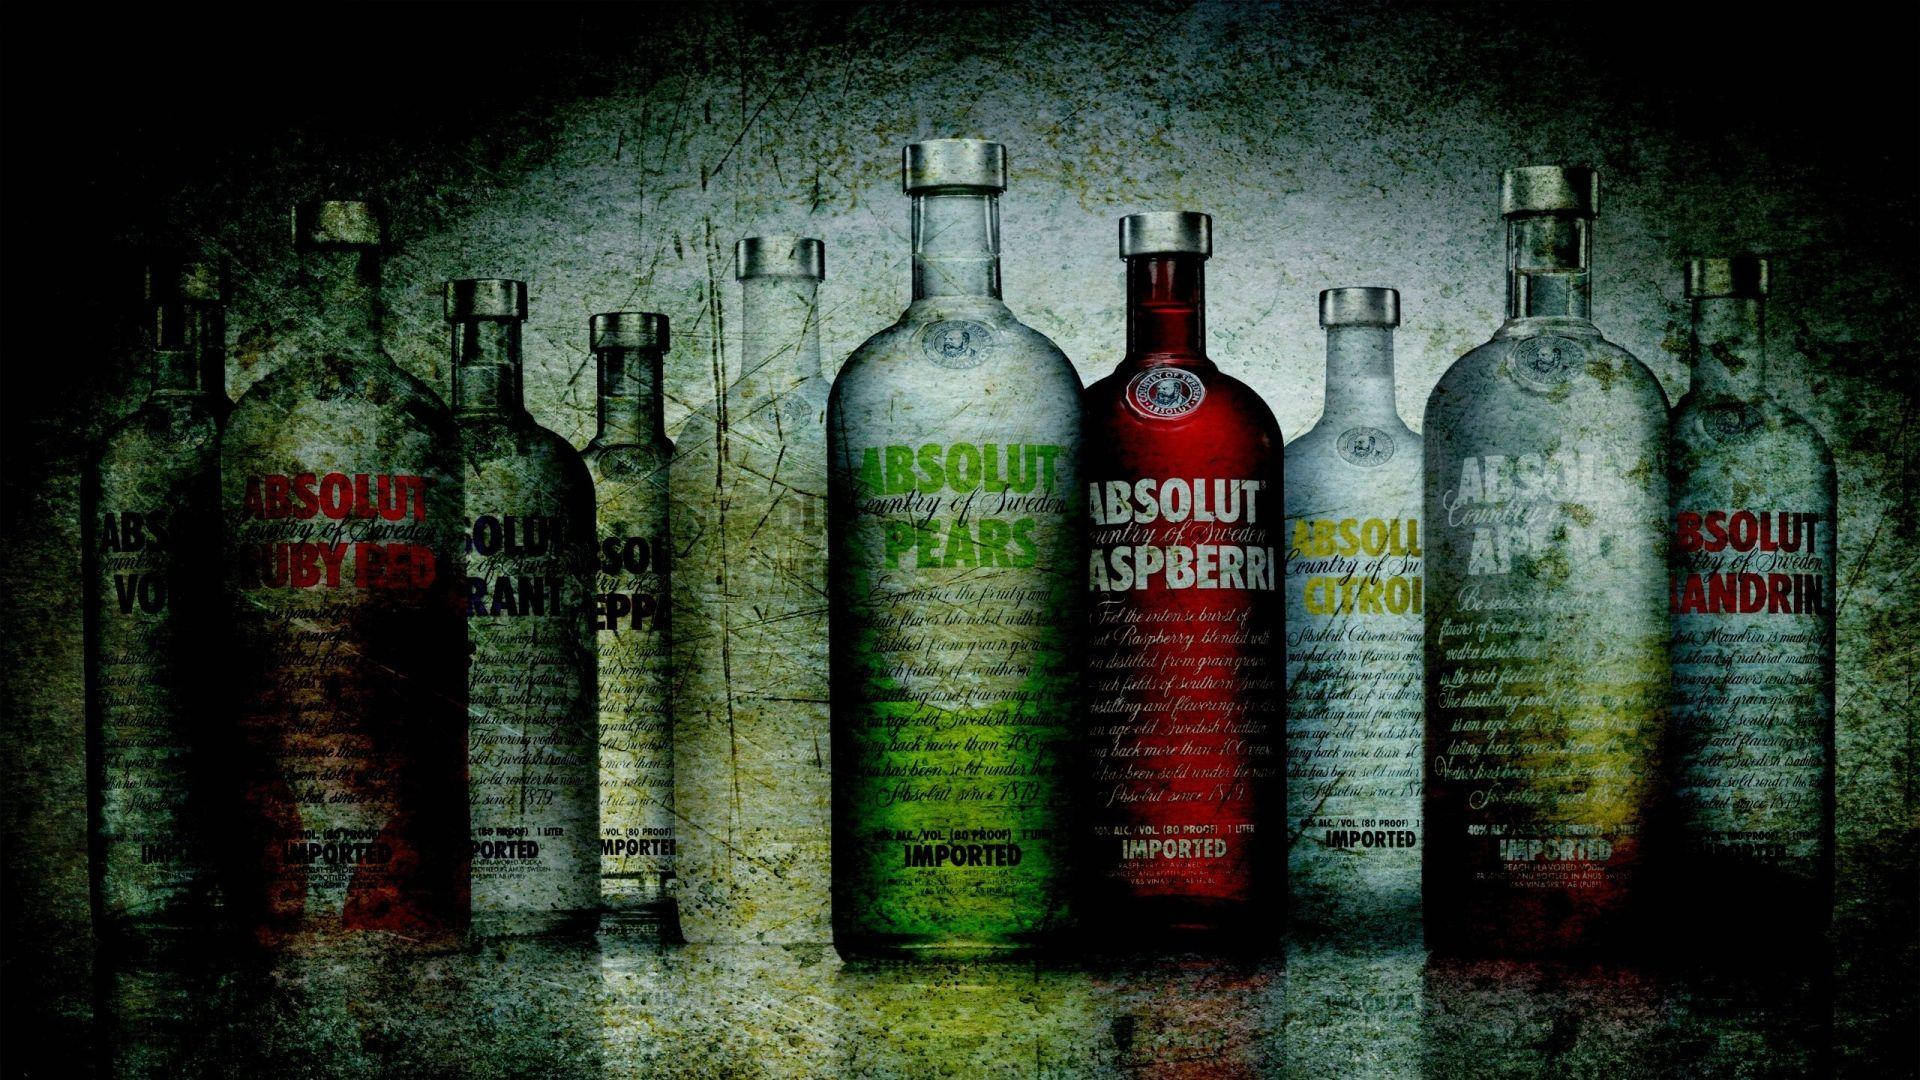 1920x1080 Full Hd Absolut Bottles